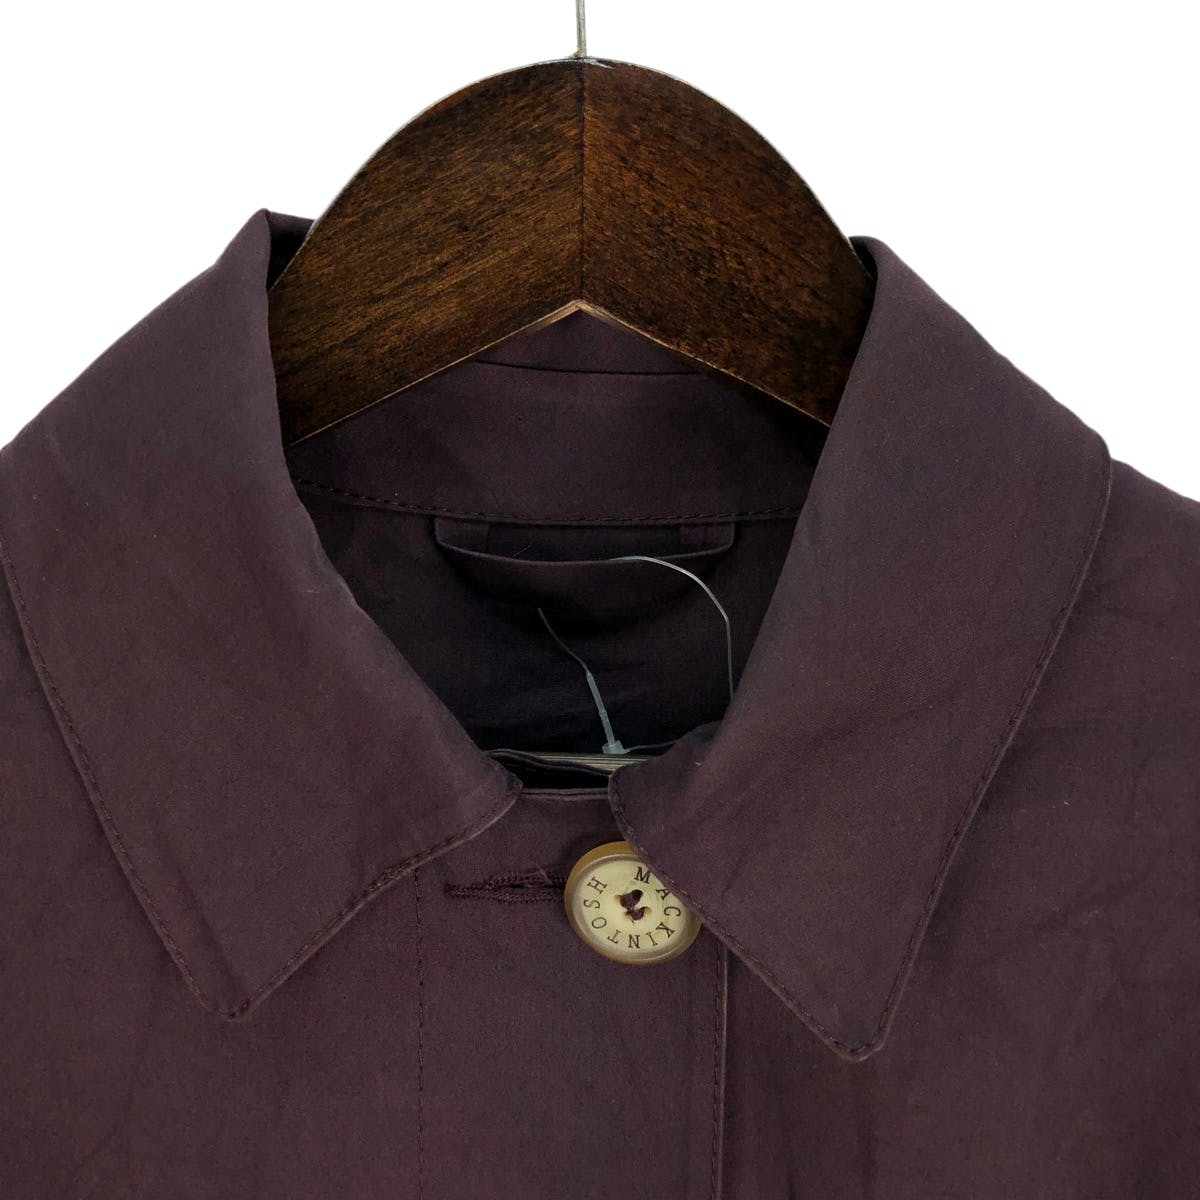 Vintage Mackintosh Trench Coat - 6